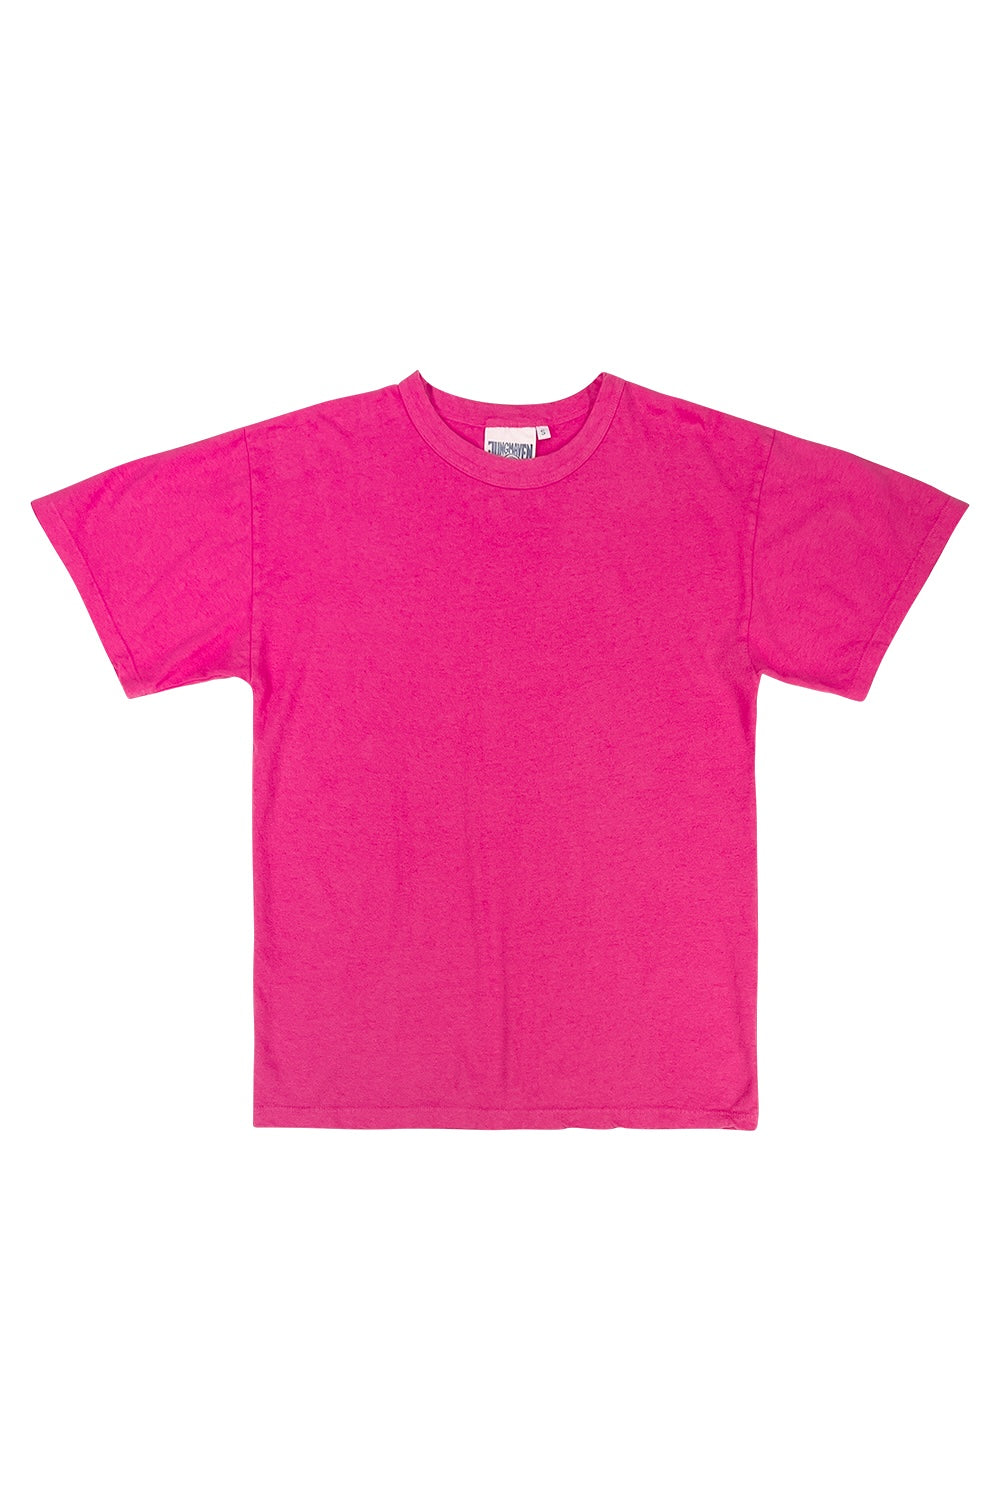 Vernon Oversized Tee | Jungmaven Hemp Clothing & Accessories / Color: Pink Grapefruit